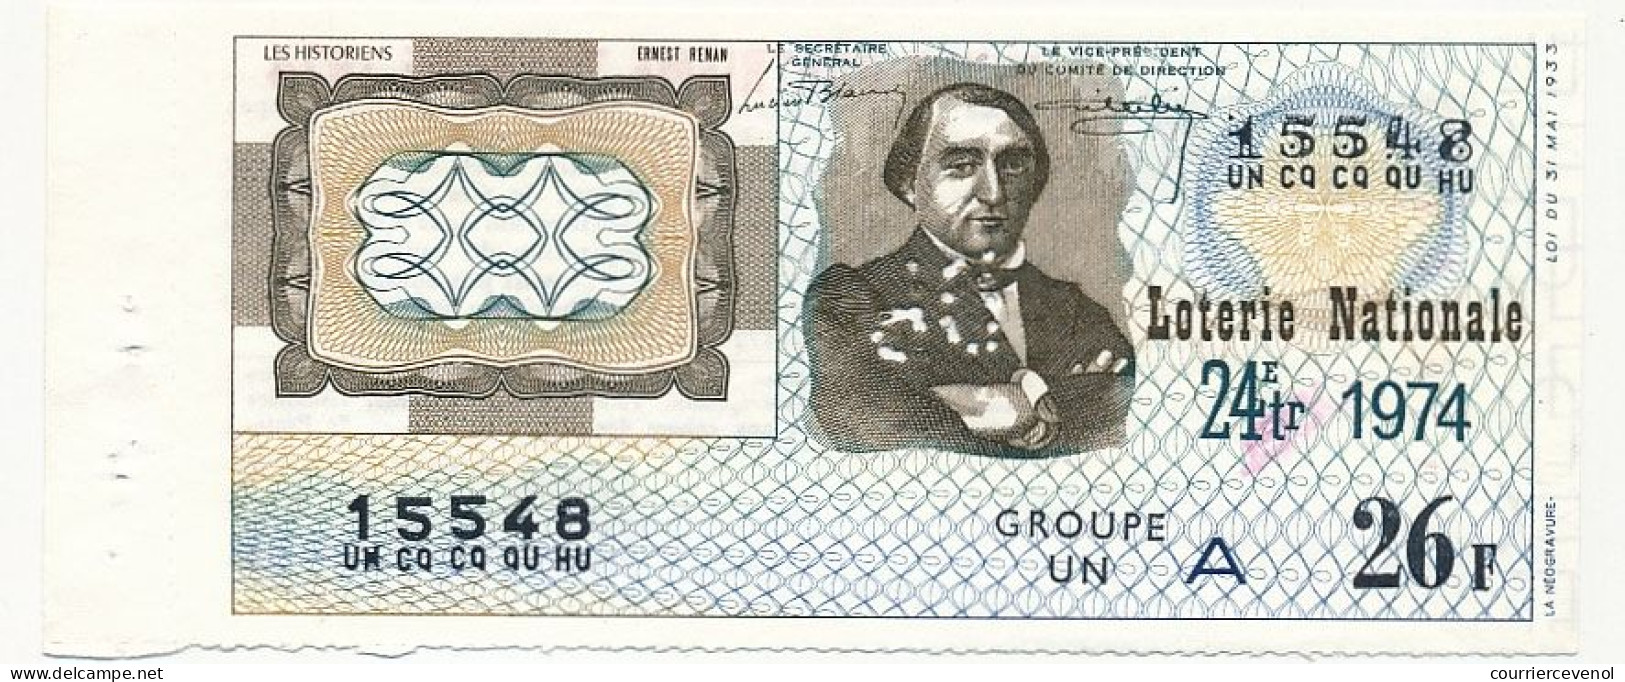 FRANCE - Loterie Nationale - Les Historiens - Ernest Renan - 24ème Tranche - 1974 - Perforation - Lottery Tickets